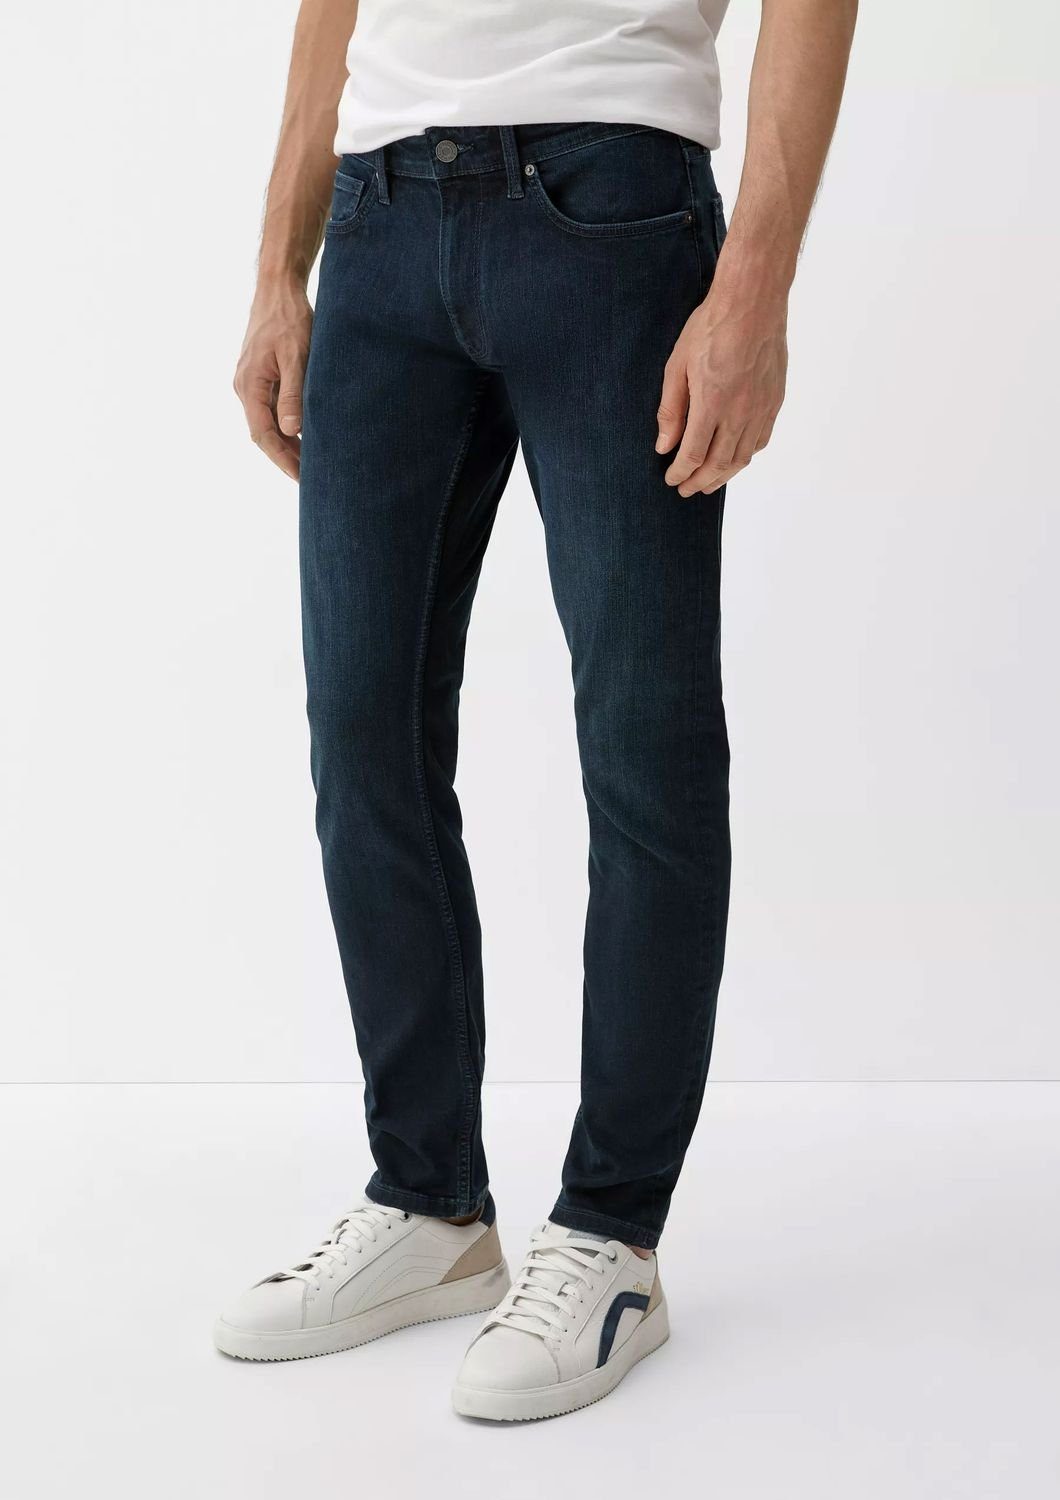 s.Oliver Slim-fit-Jeans KEITH Slim Fit, Dunkelblau Beinverlauf: Bundhöhe: Medium rise, Straight Leg